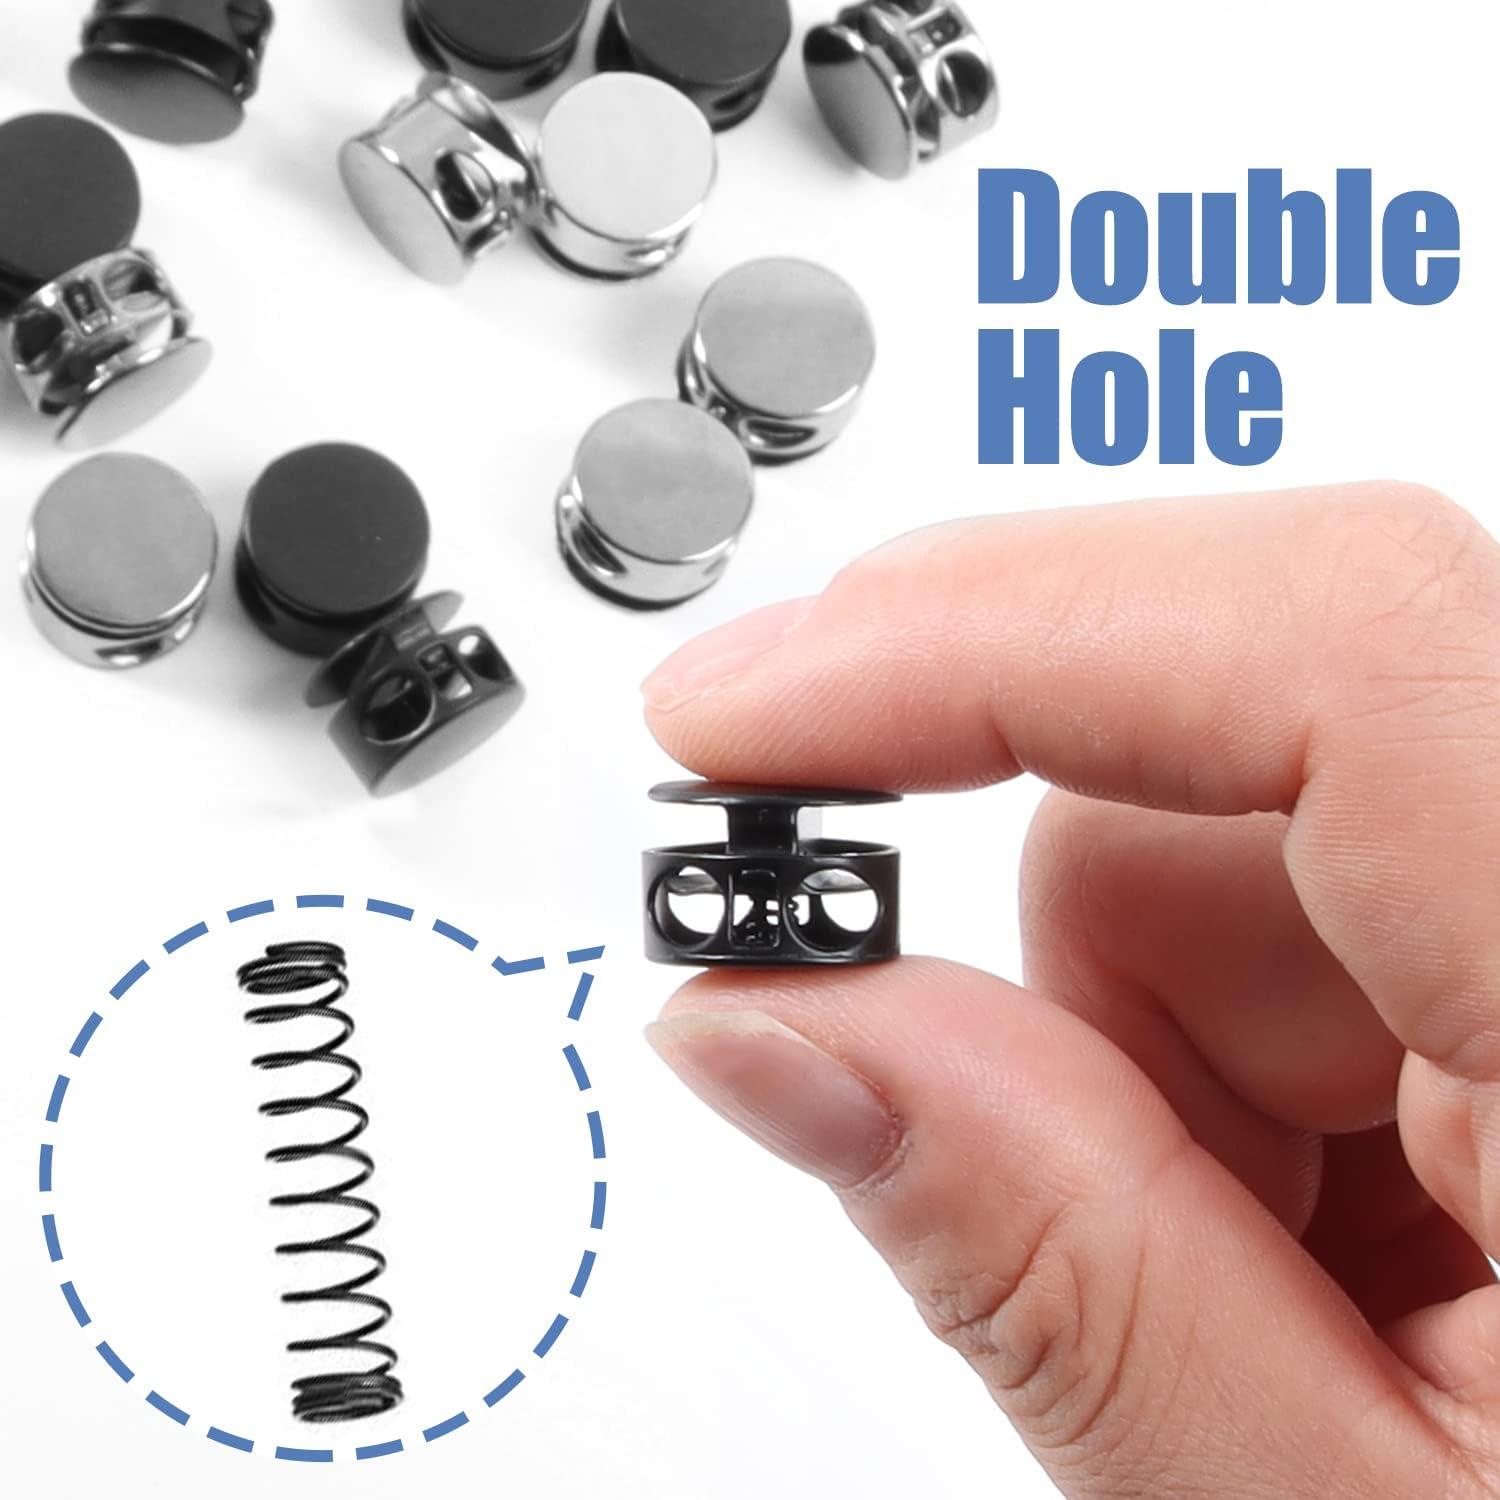 Double Hole Spring Cord Locks